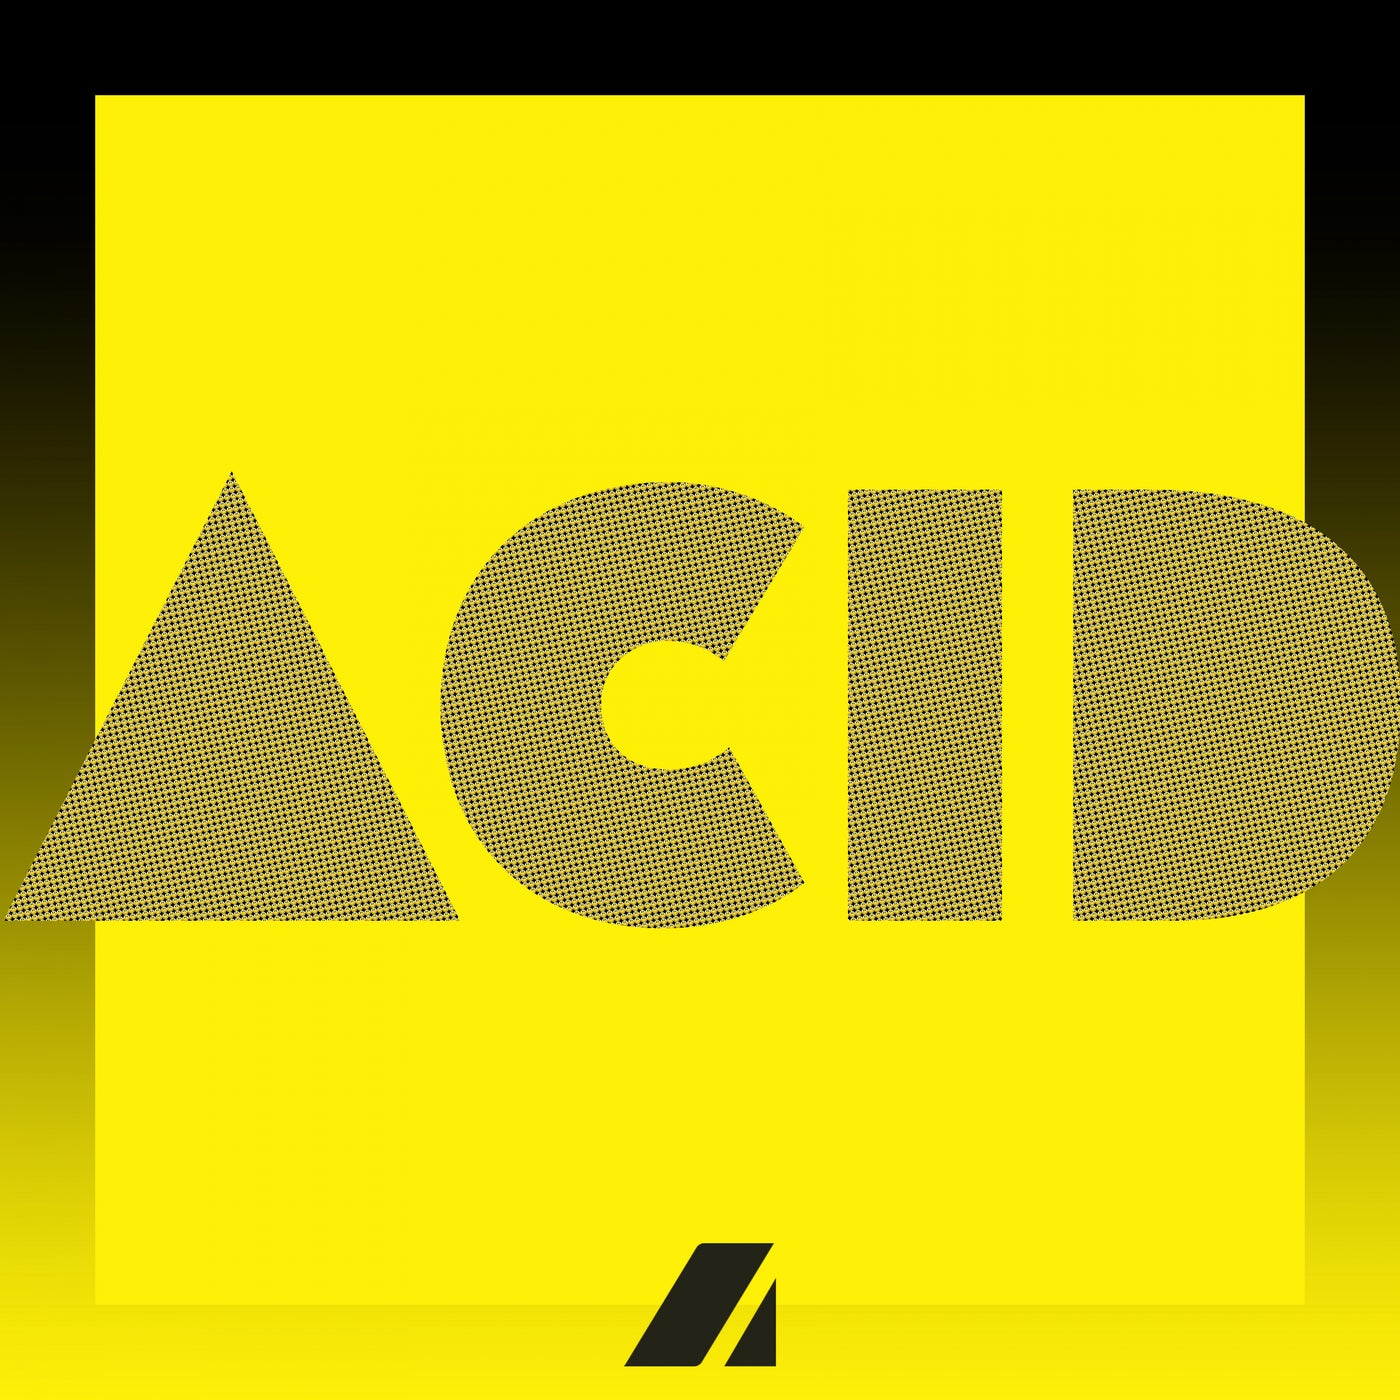 Acid by Christopher Kah